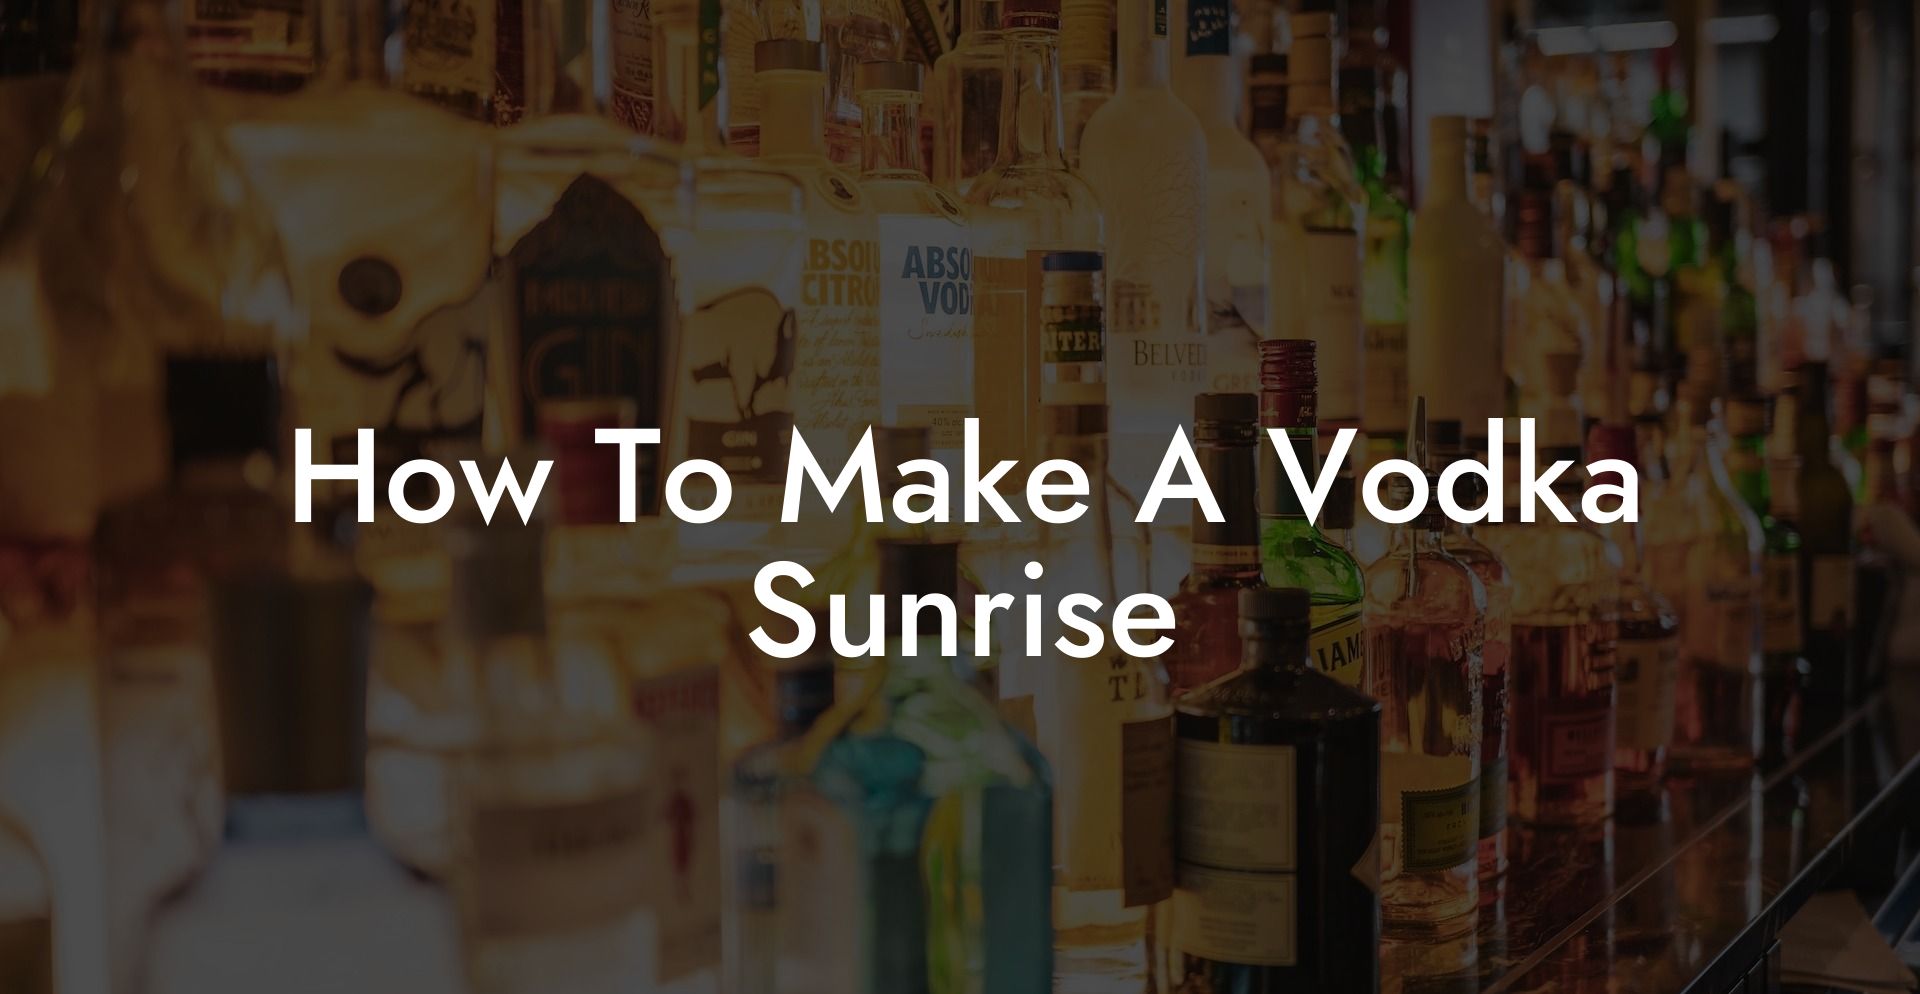 How To Make A Vodka Sunrise